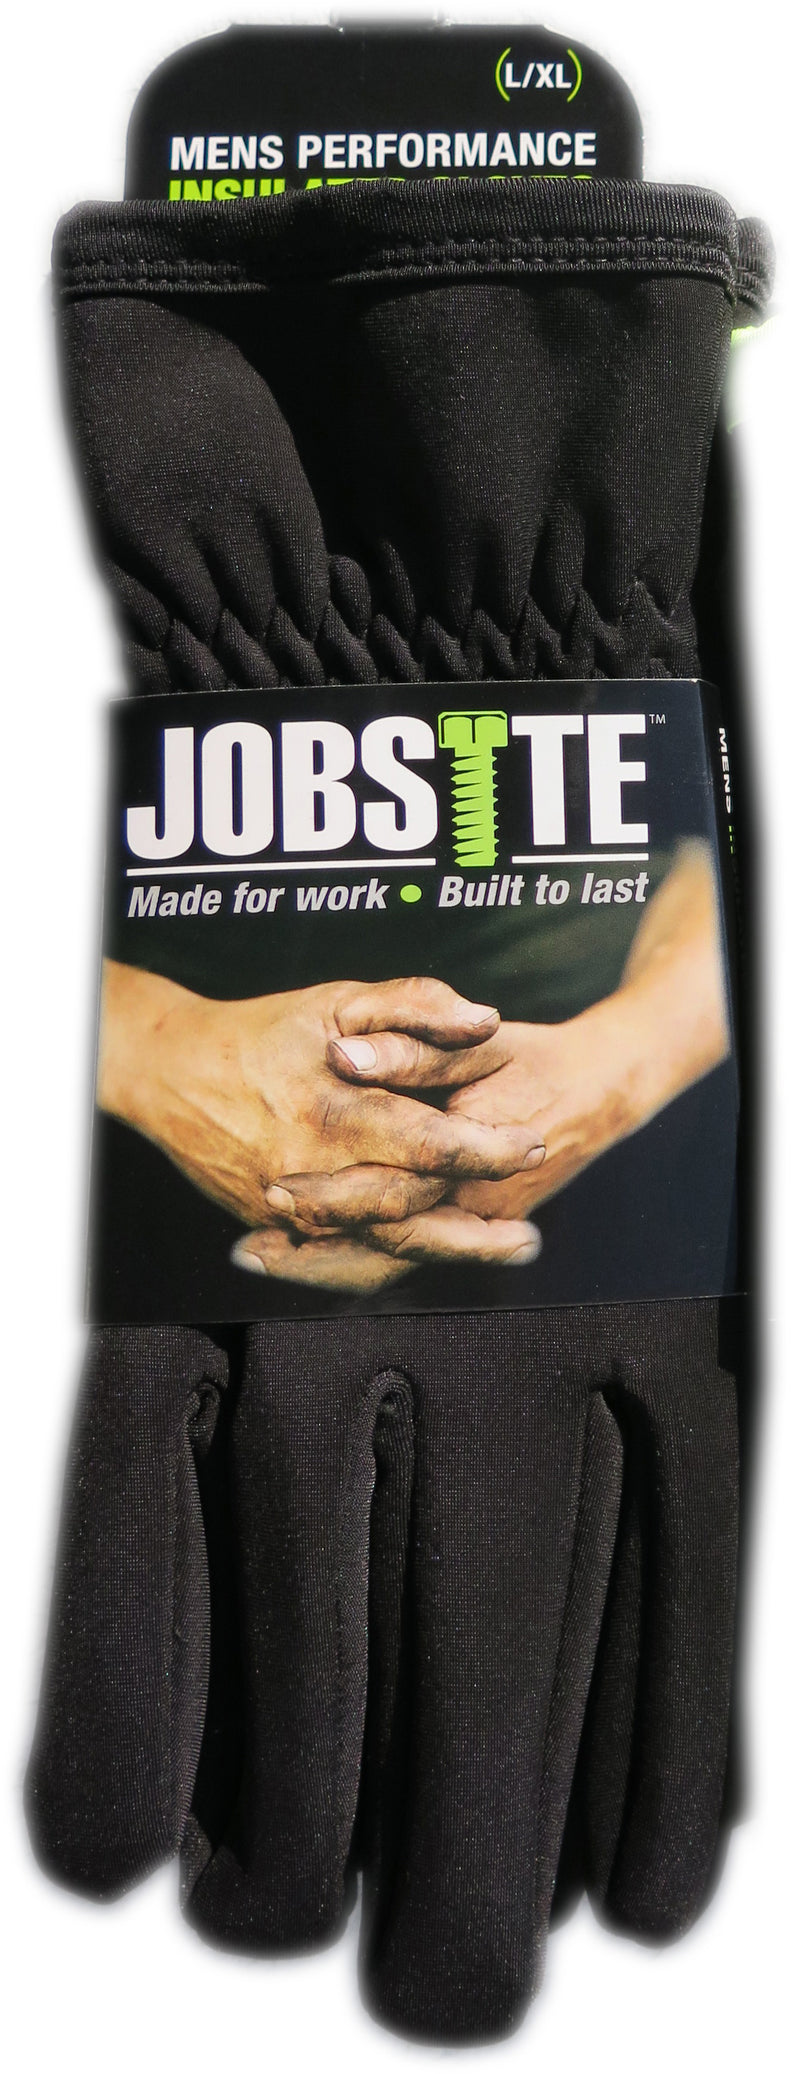 Jobsite Men's Performance Insulated Rugged Cuffed Work Gloves